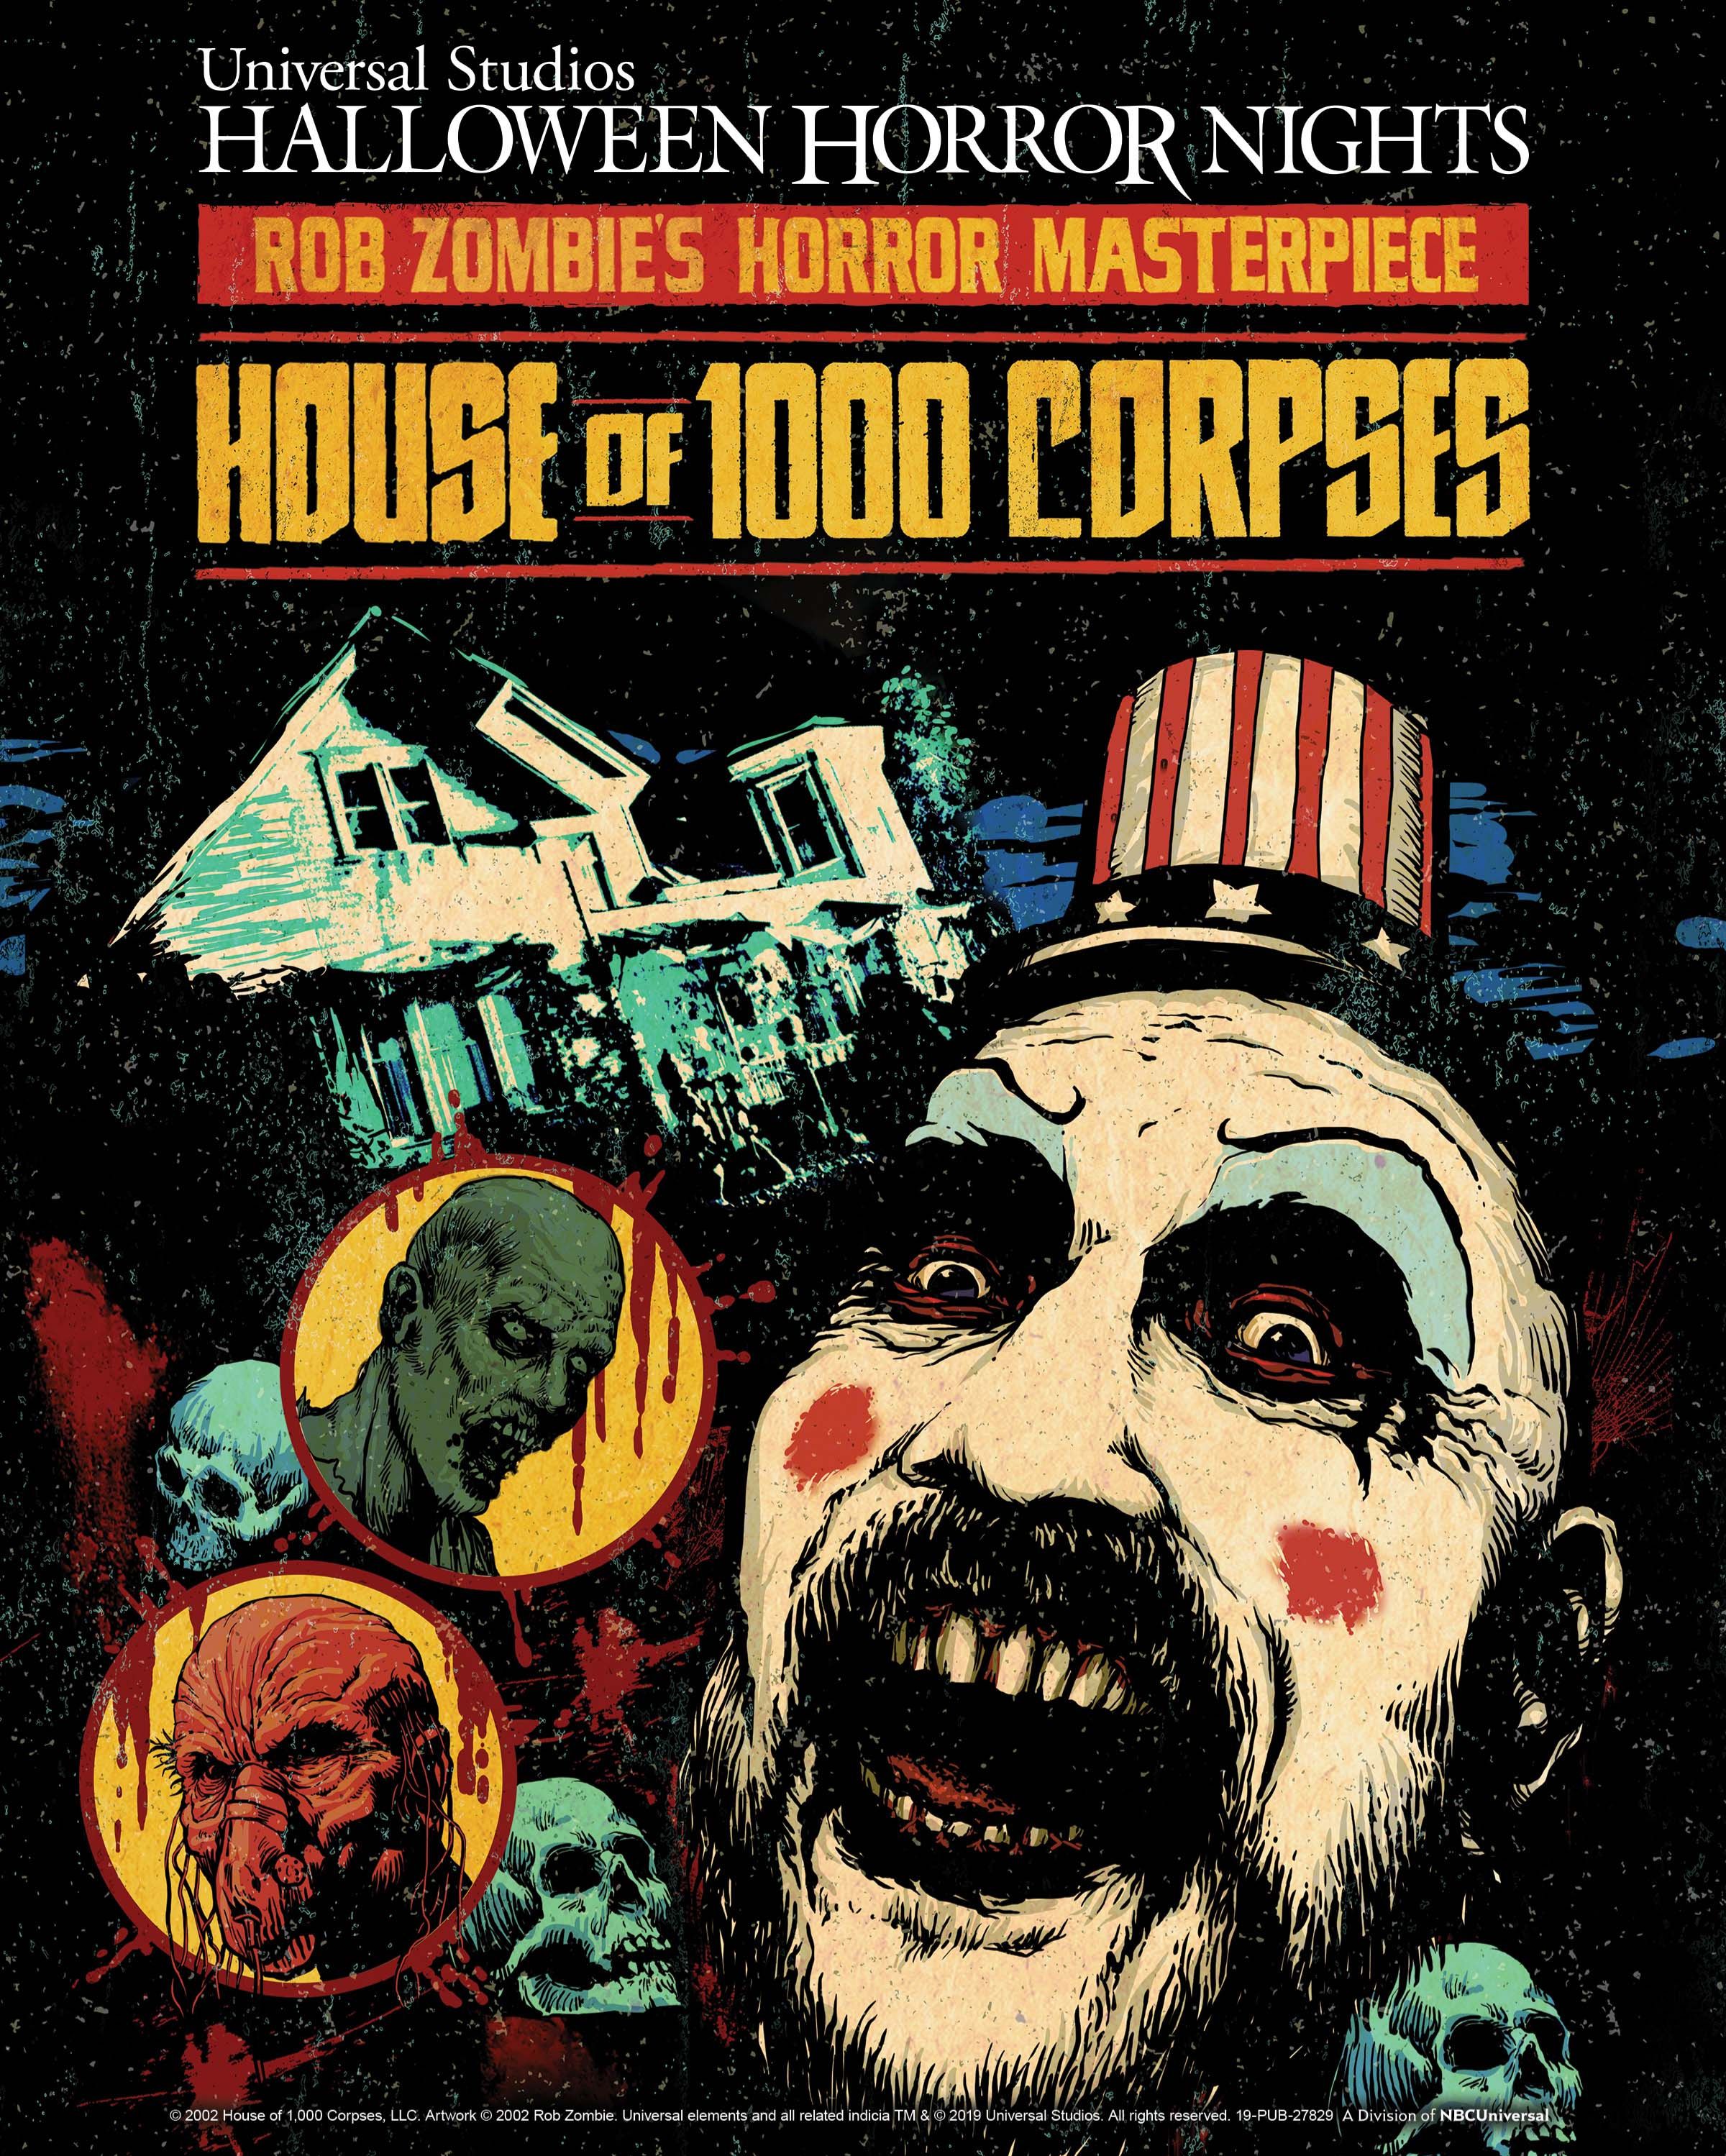 House of 1000 Corpses Halloween Horror Nights Orlando